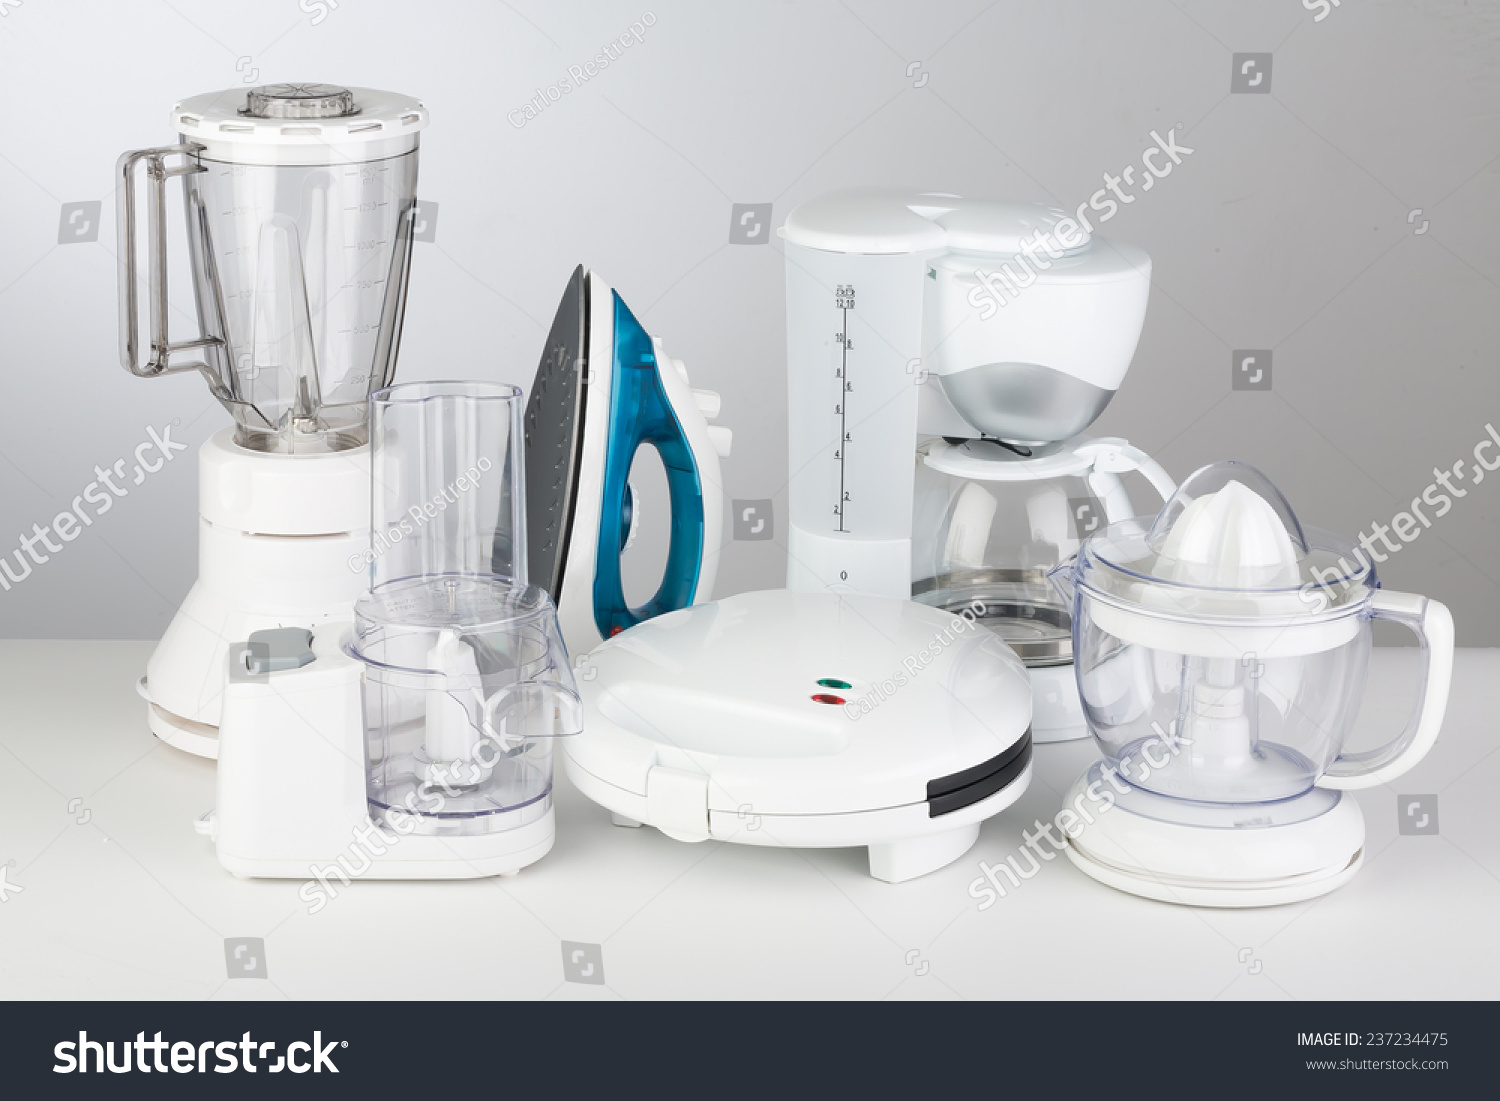 Kitchen Appliances on a neutral background #237234475